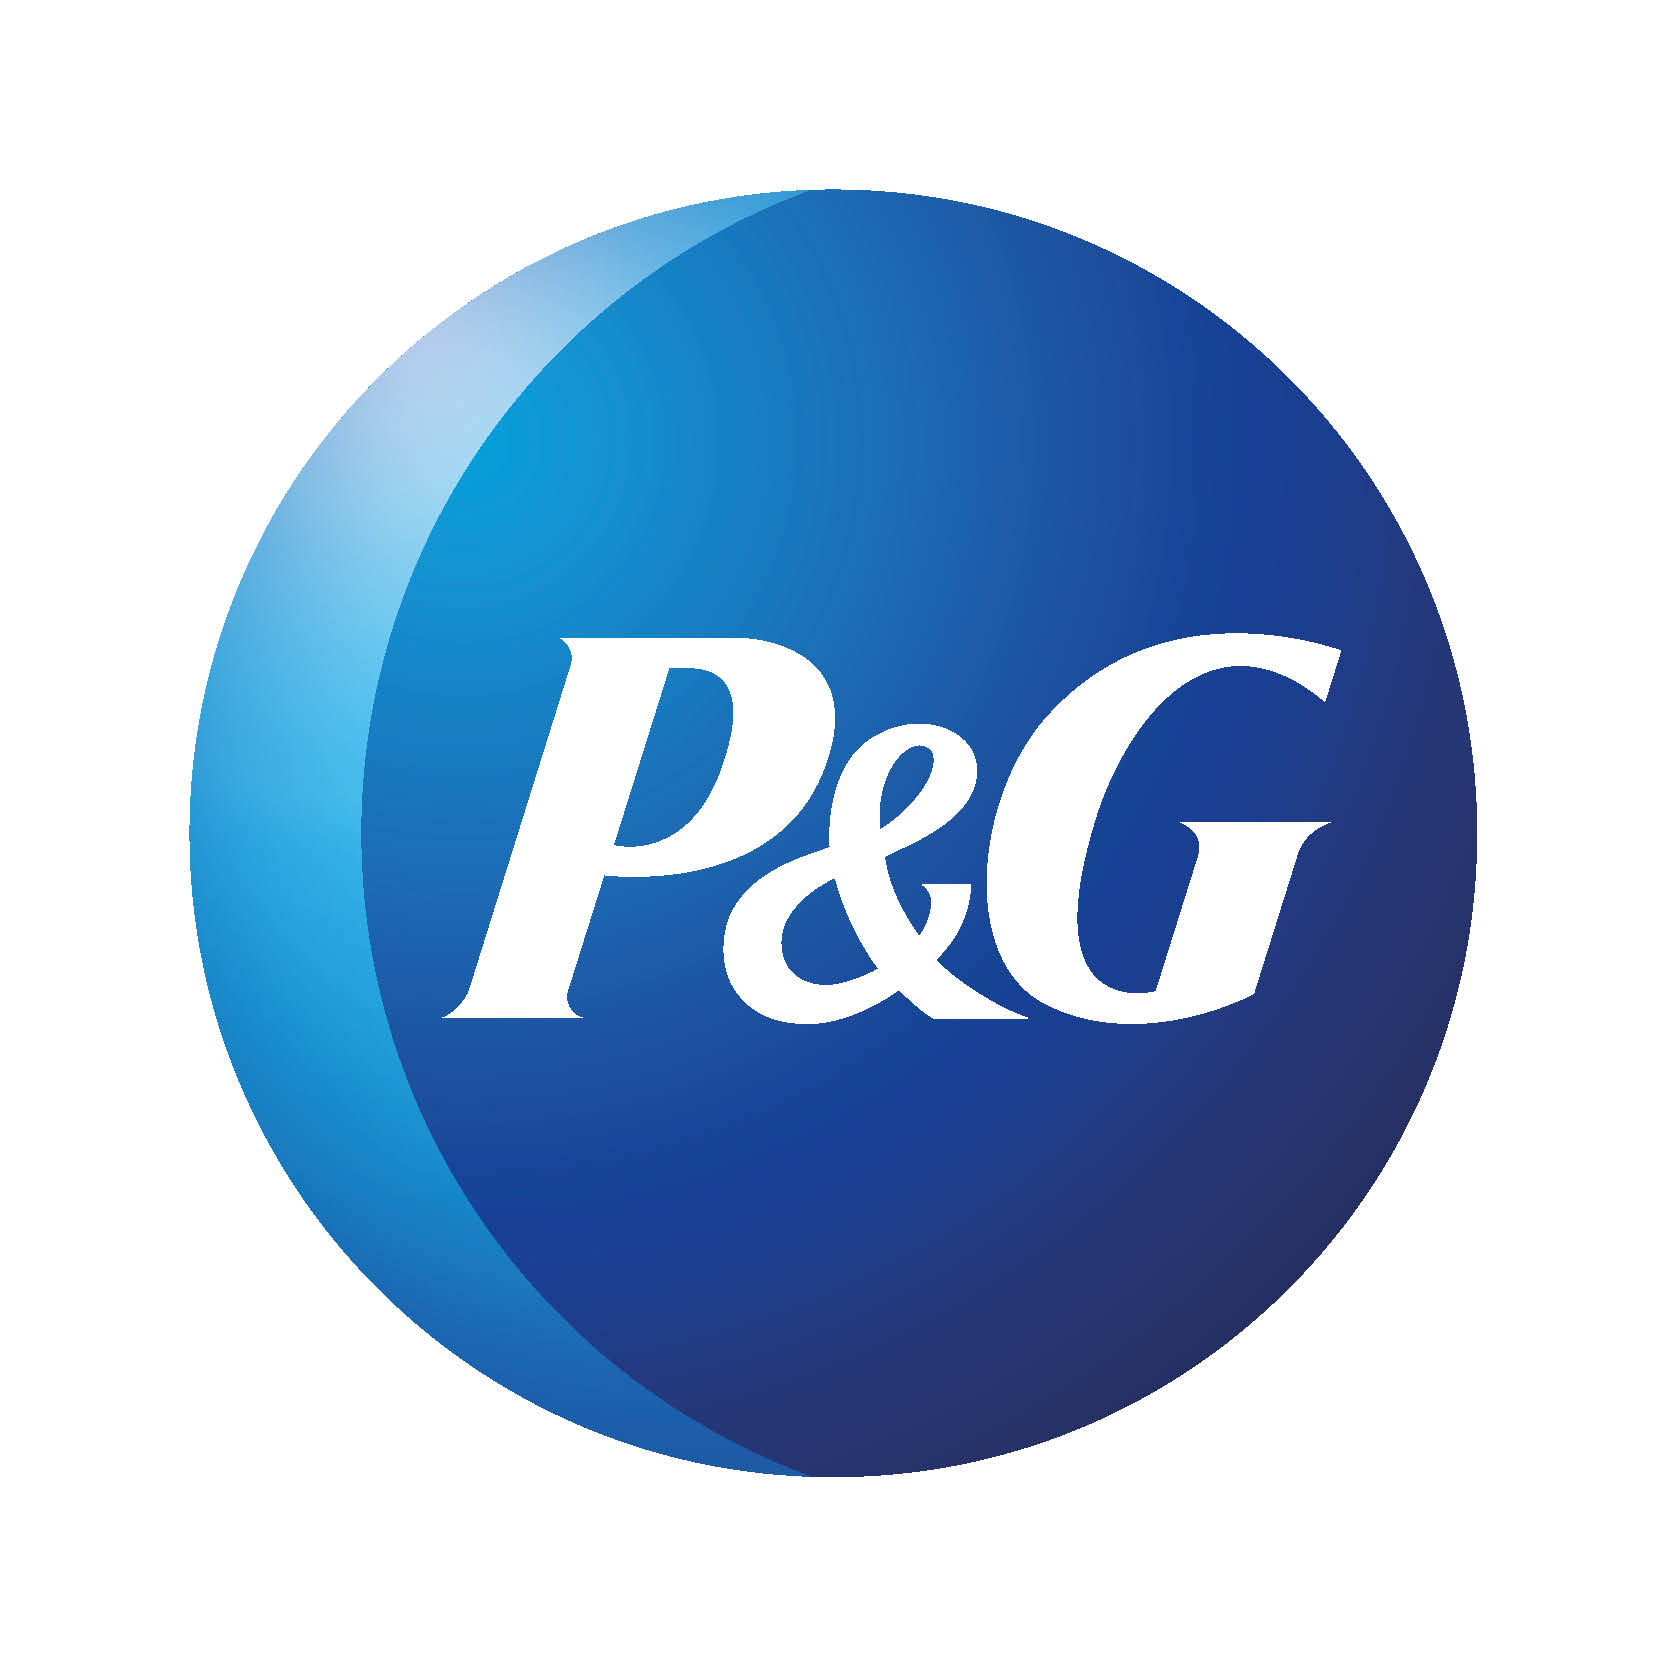 P&G shares